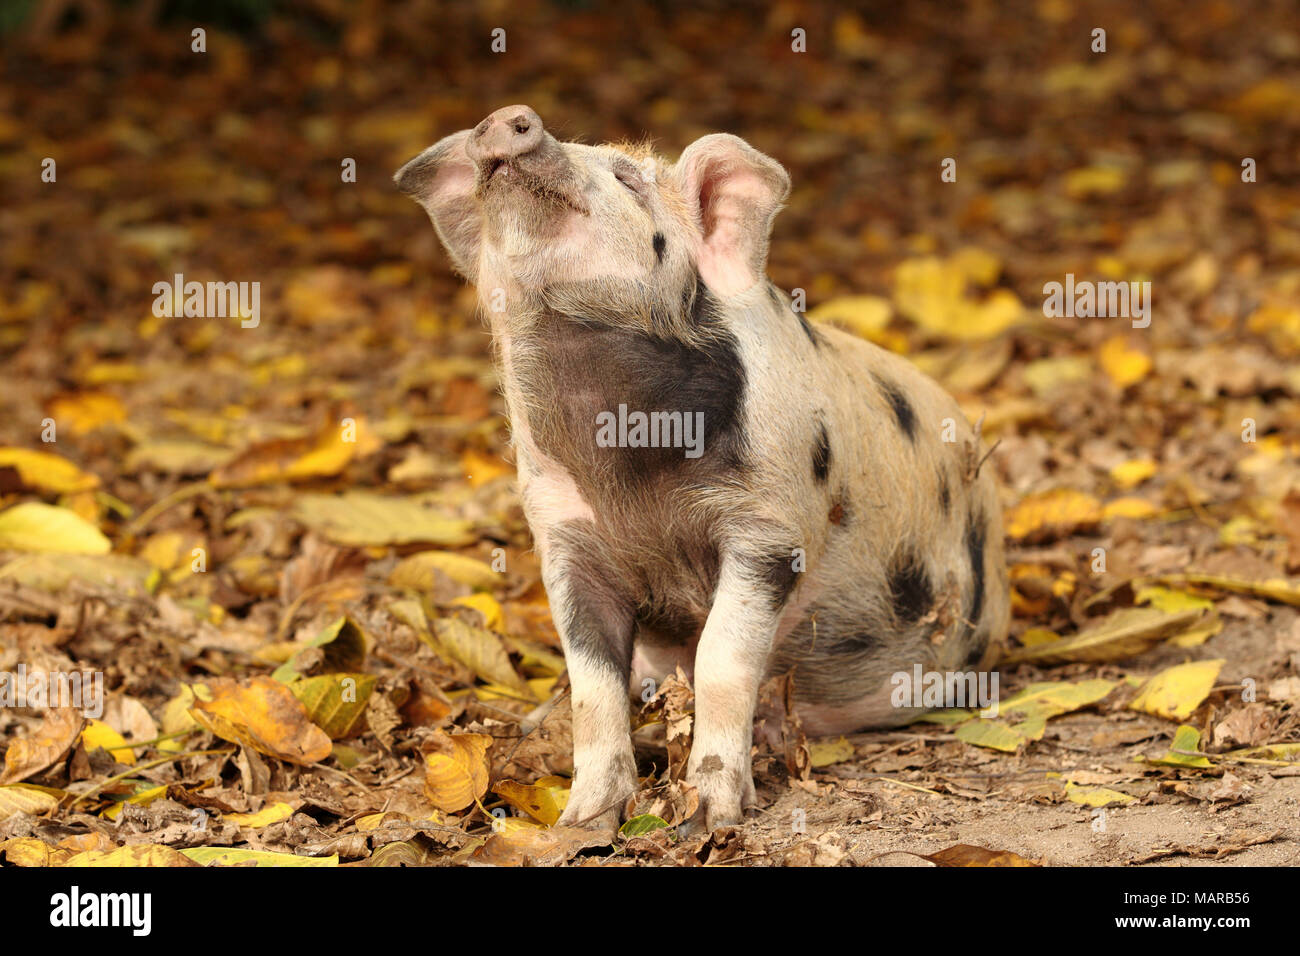 Domestic Pig, Turopolje x ?. Piglet (5 weeks old) sitting in leaf litter, testing the air. Germany Stock Photo